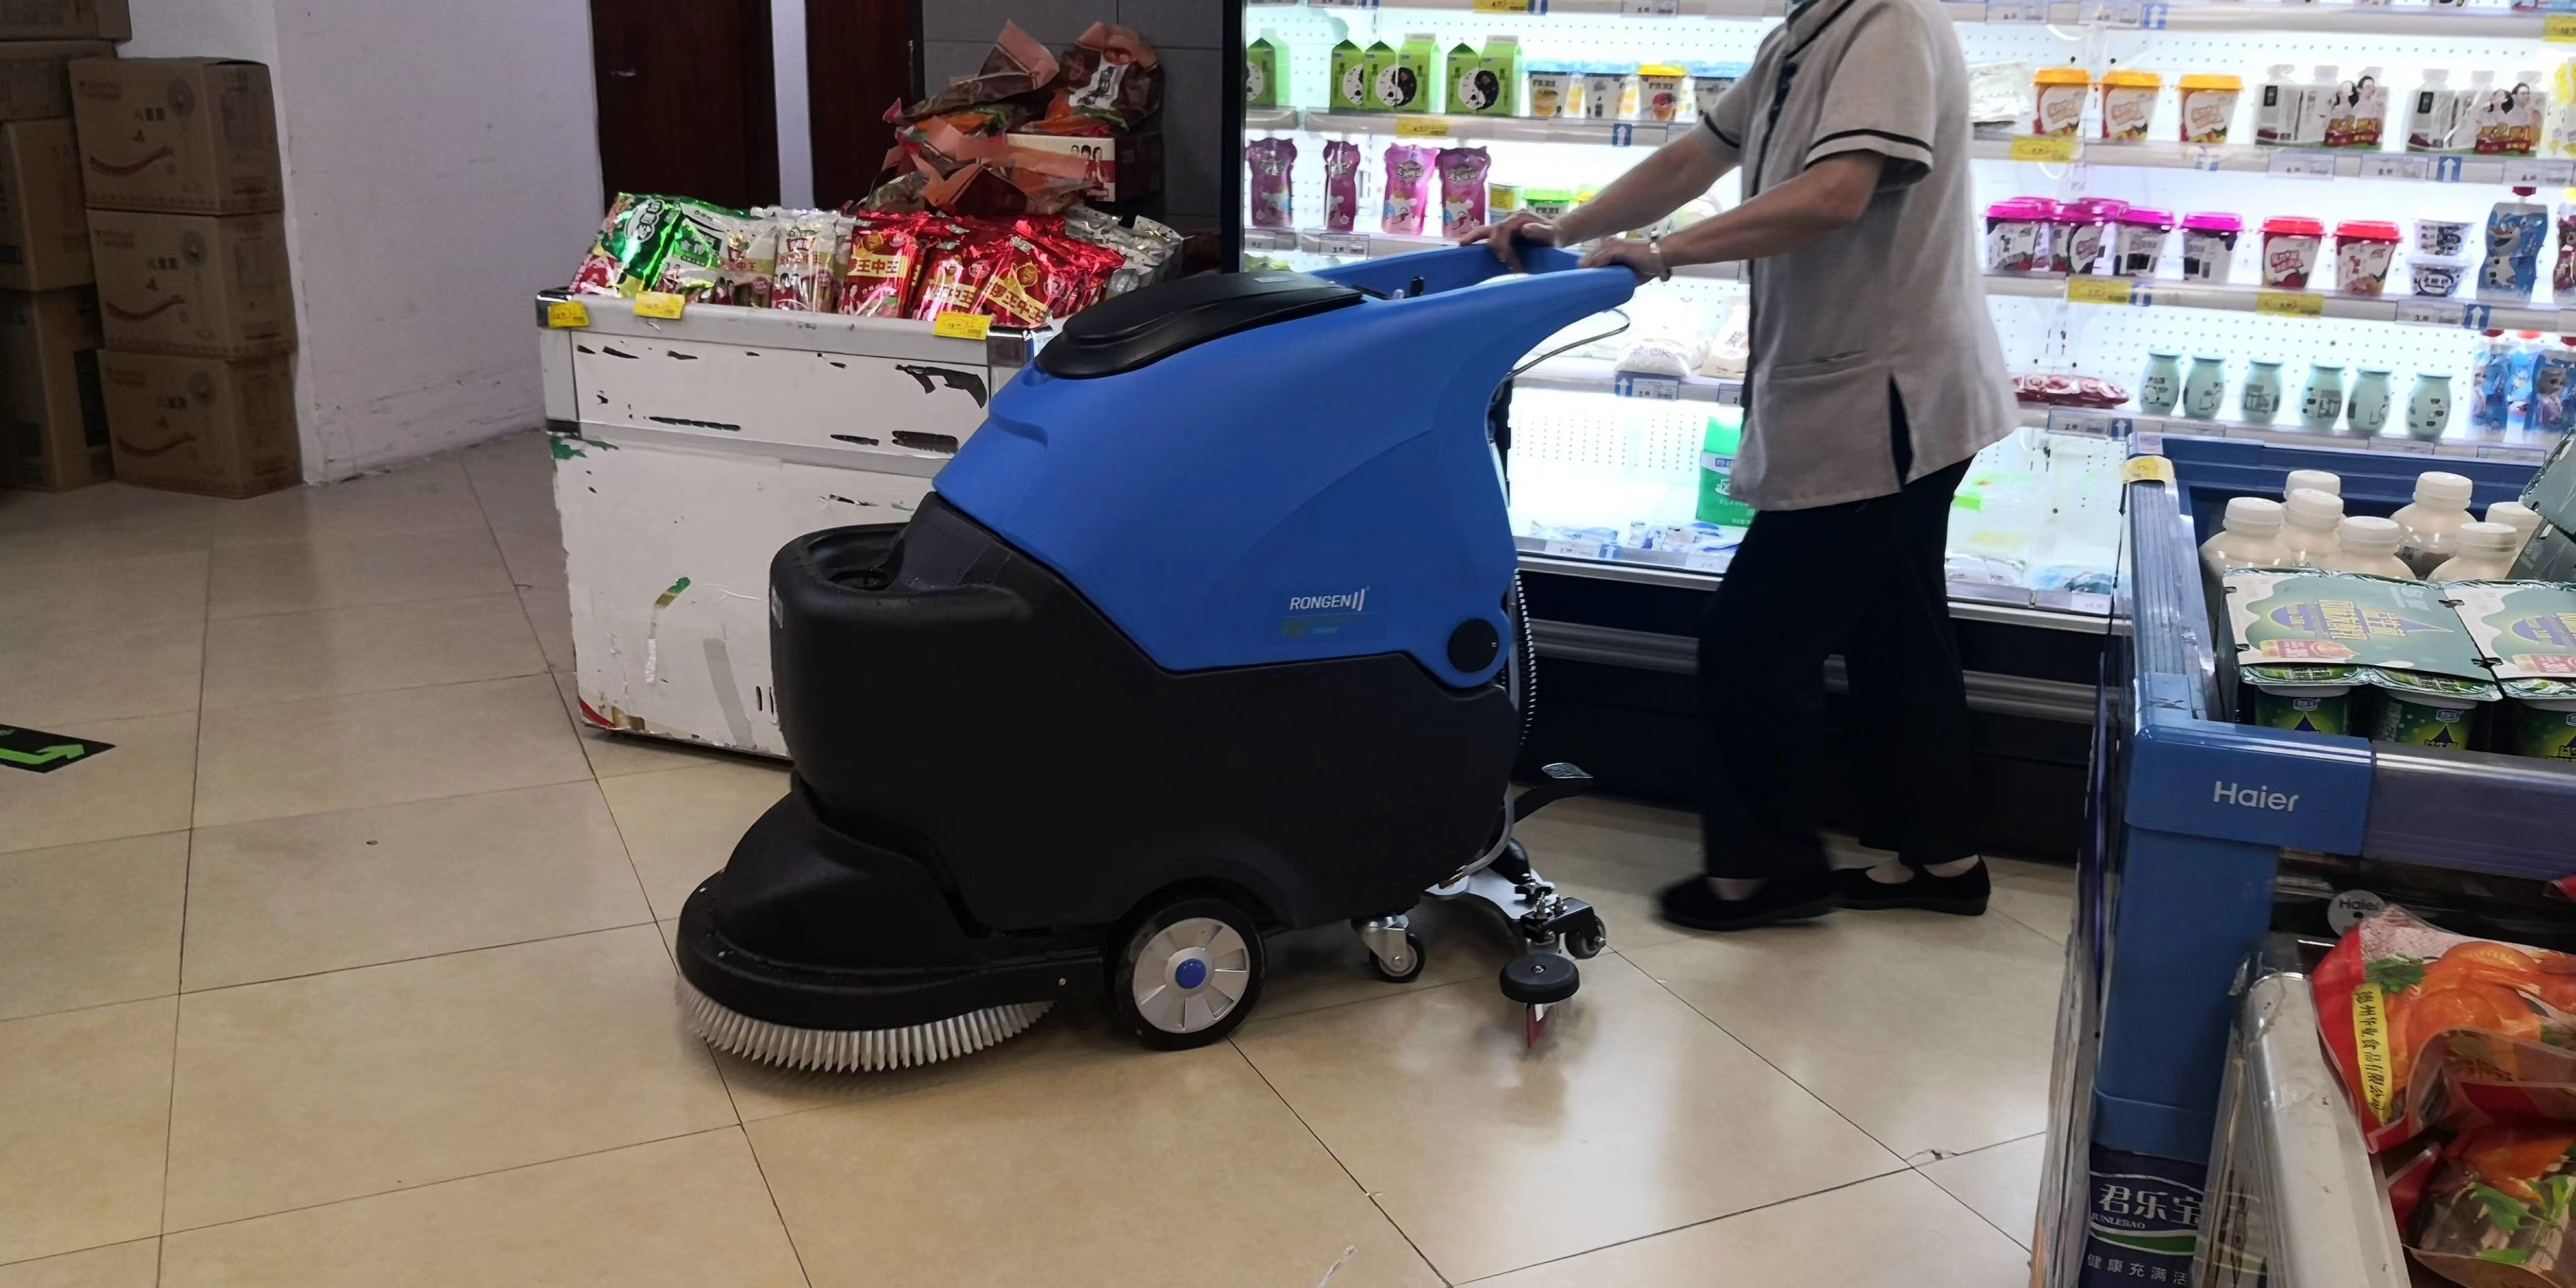 Shopping malls and supermarkets choose automatic washing machines